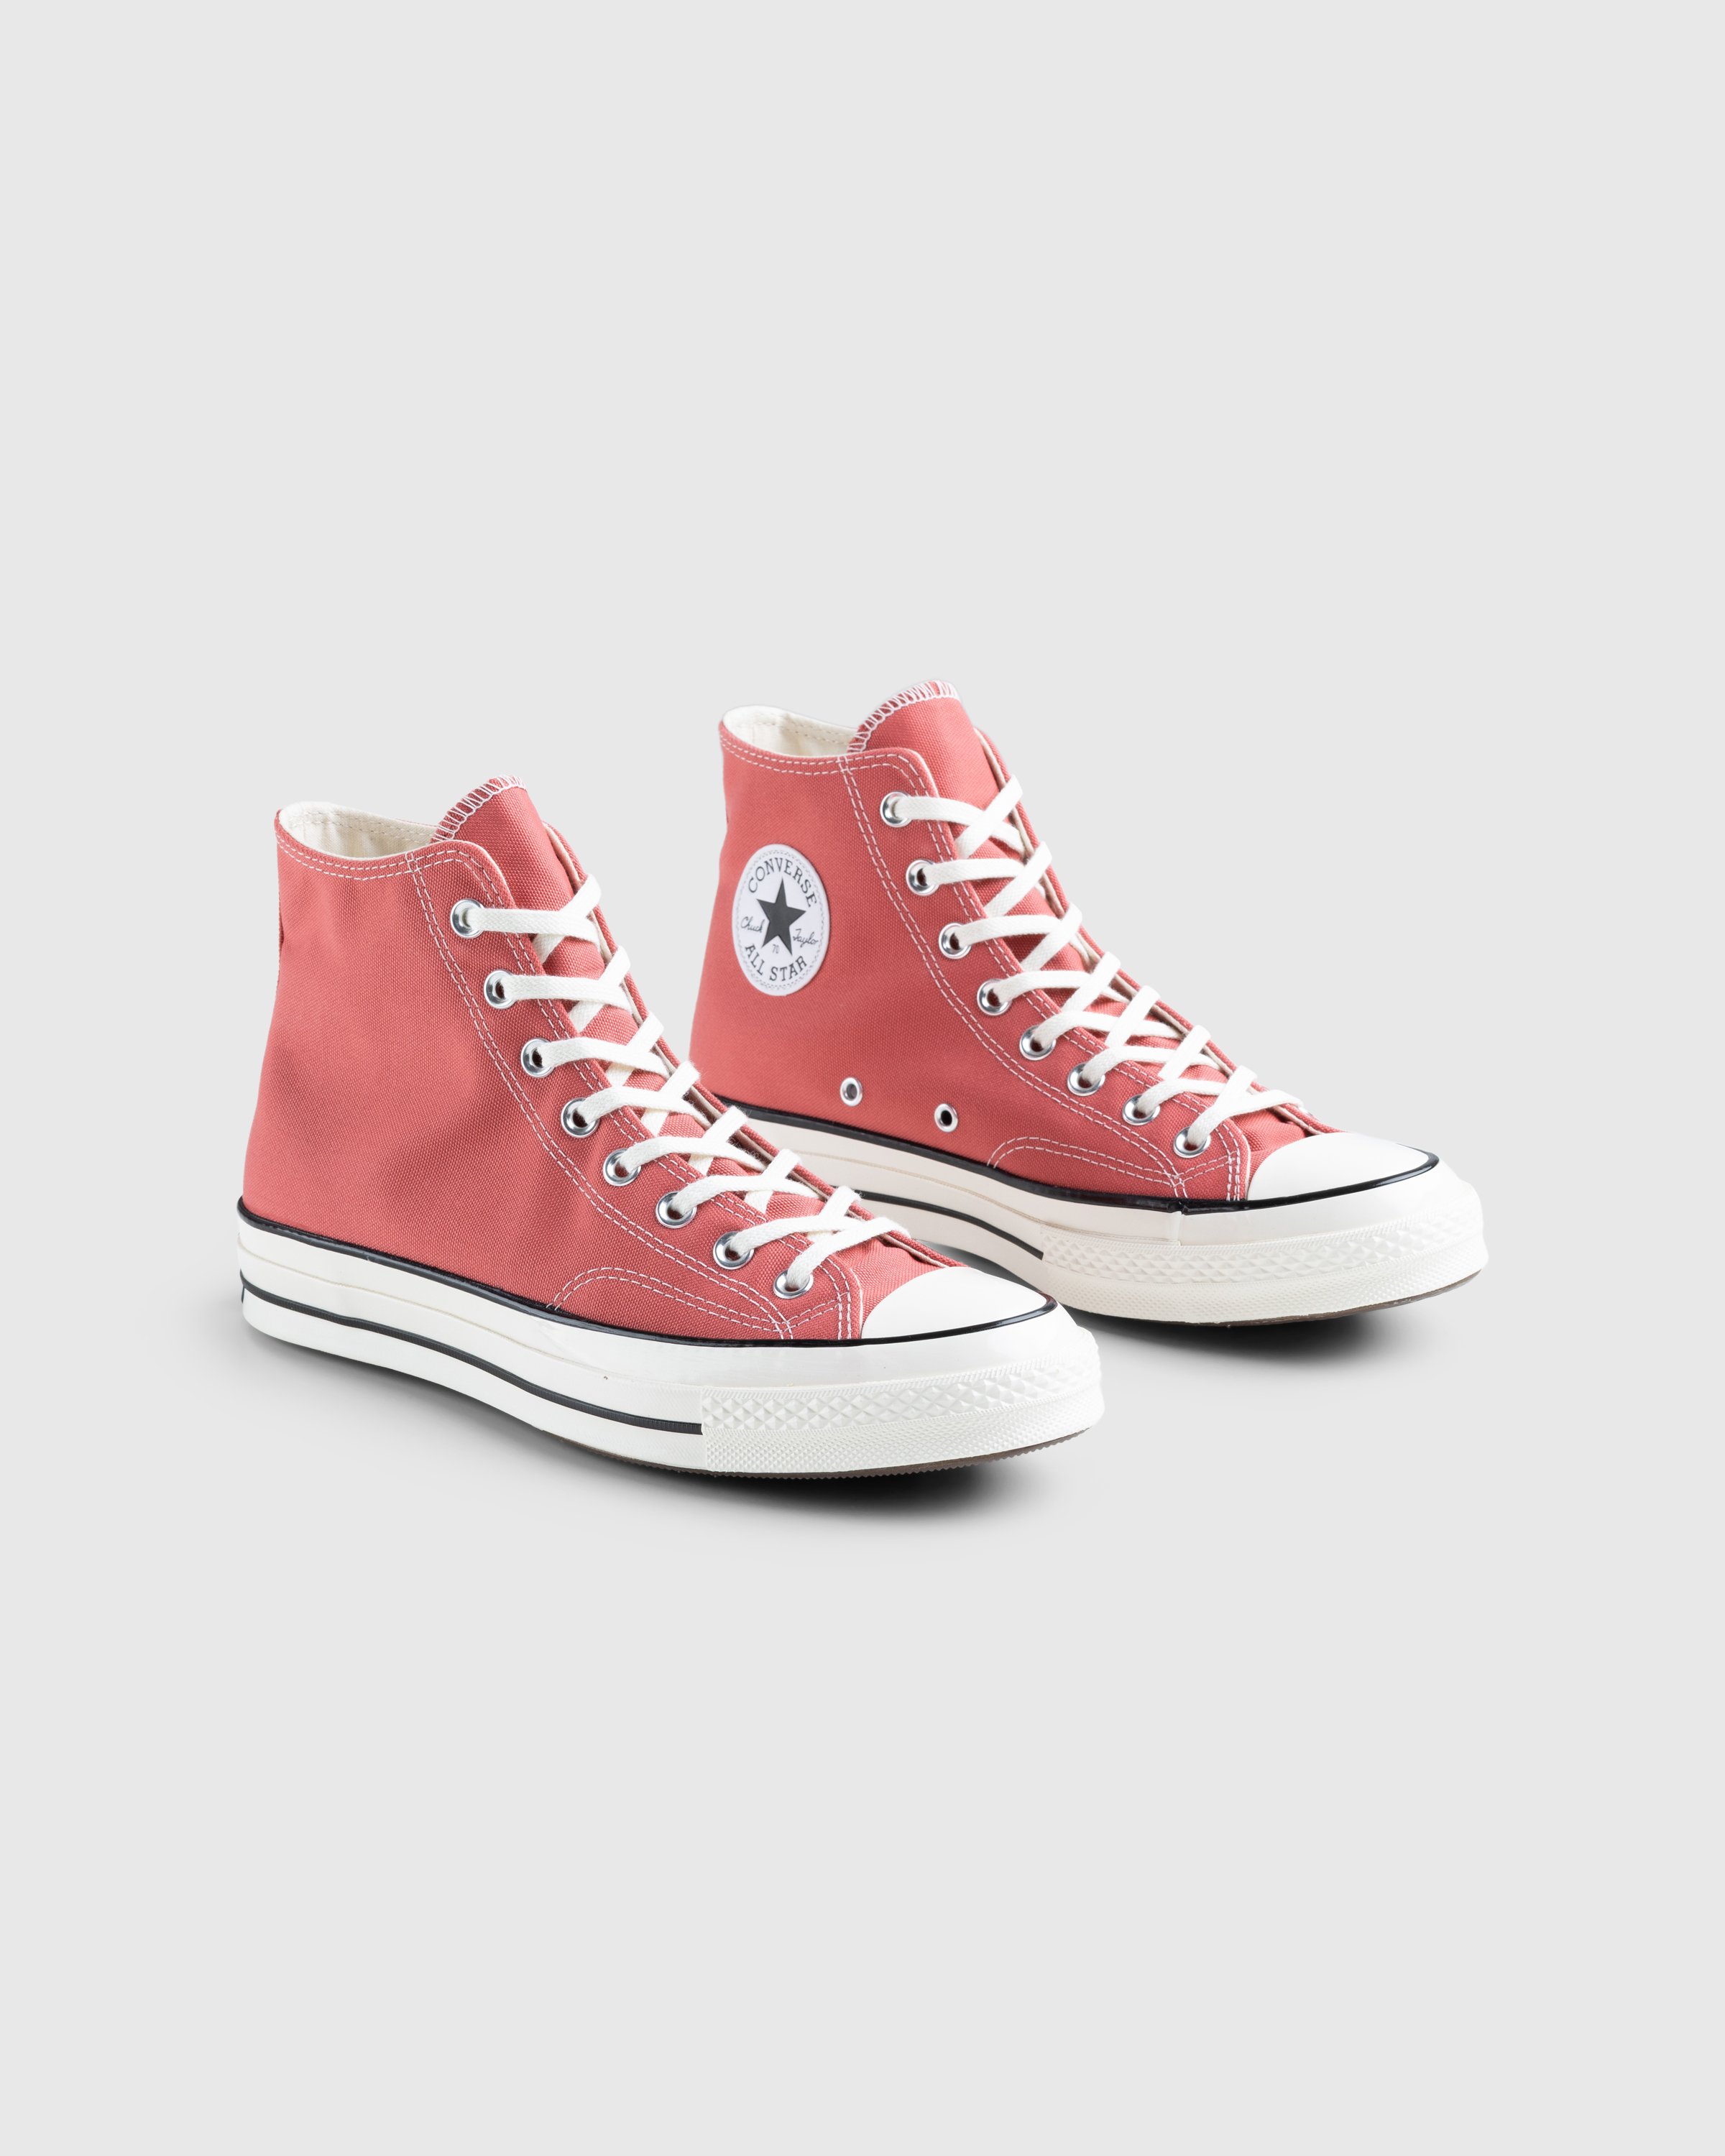 Converse - Chuck 70 HI Rhubarb Pie/Egret/Black - Footwear - Red - Image 3